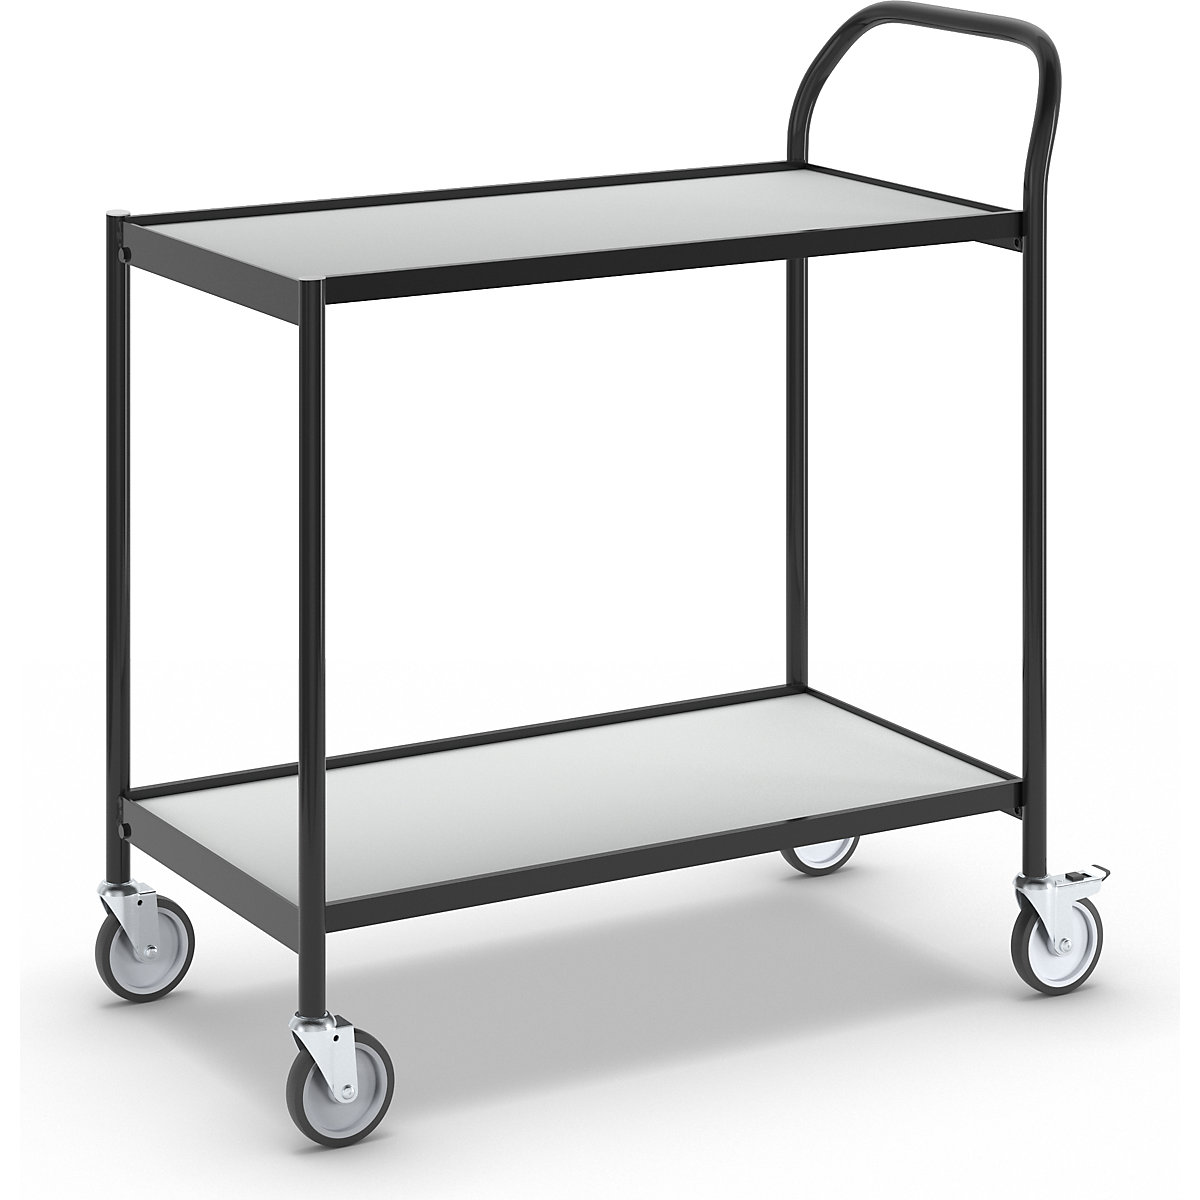 Transportni voziček – HelgeNyberg, 2 polici, DxŠ 800 x 420 mm, črno/sive barve-1